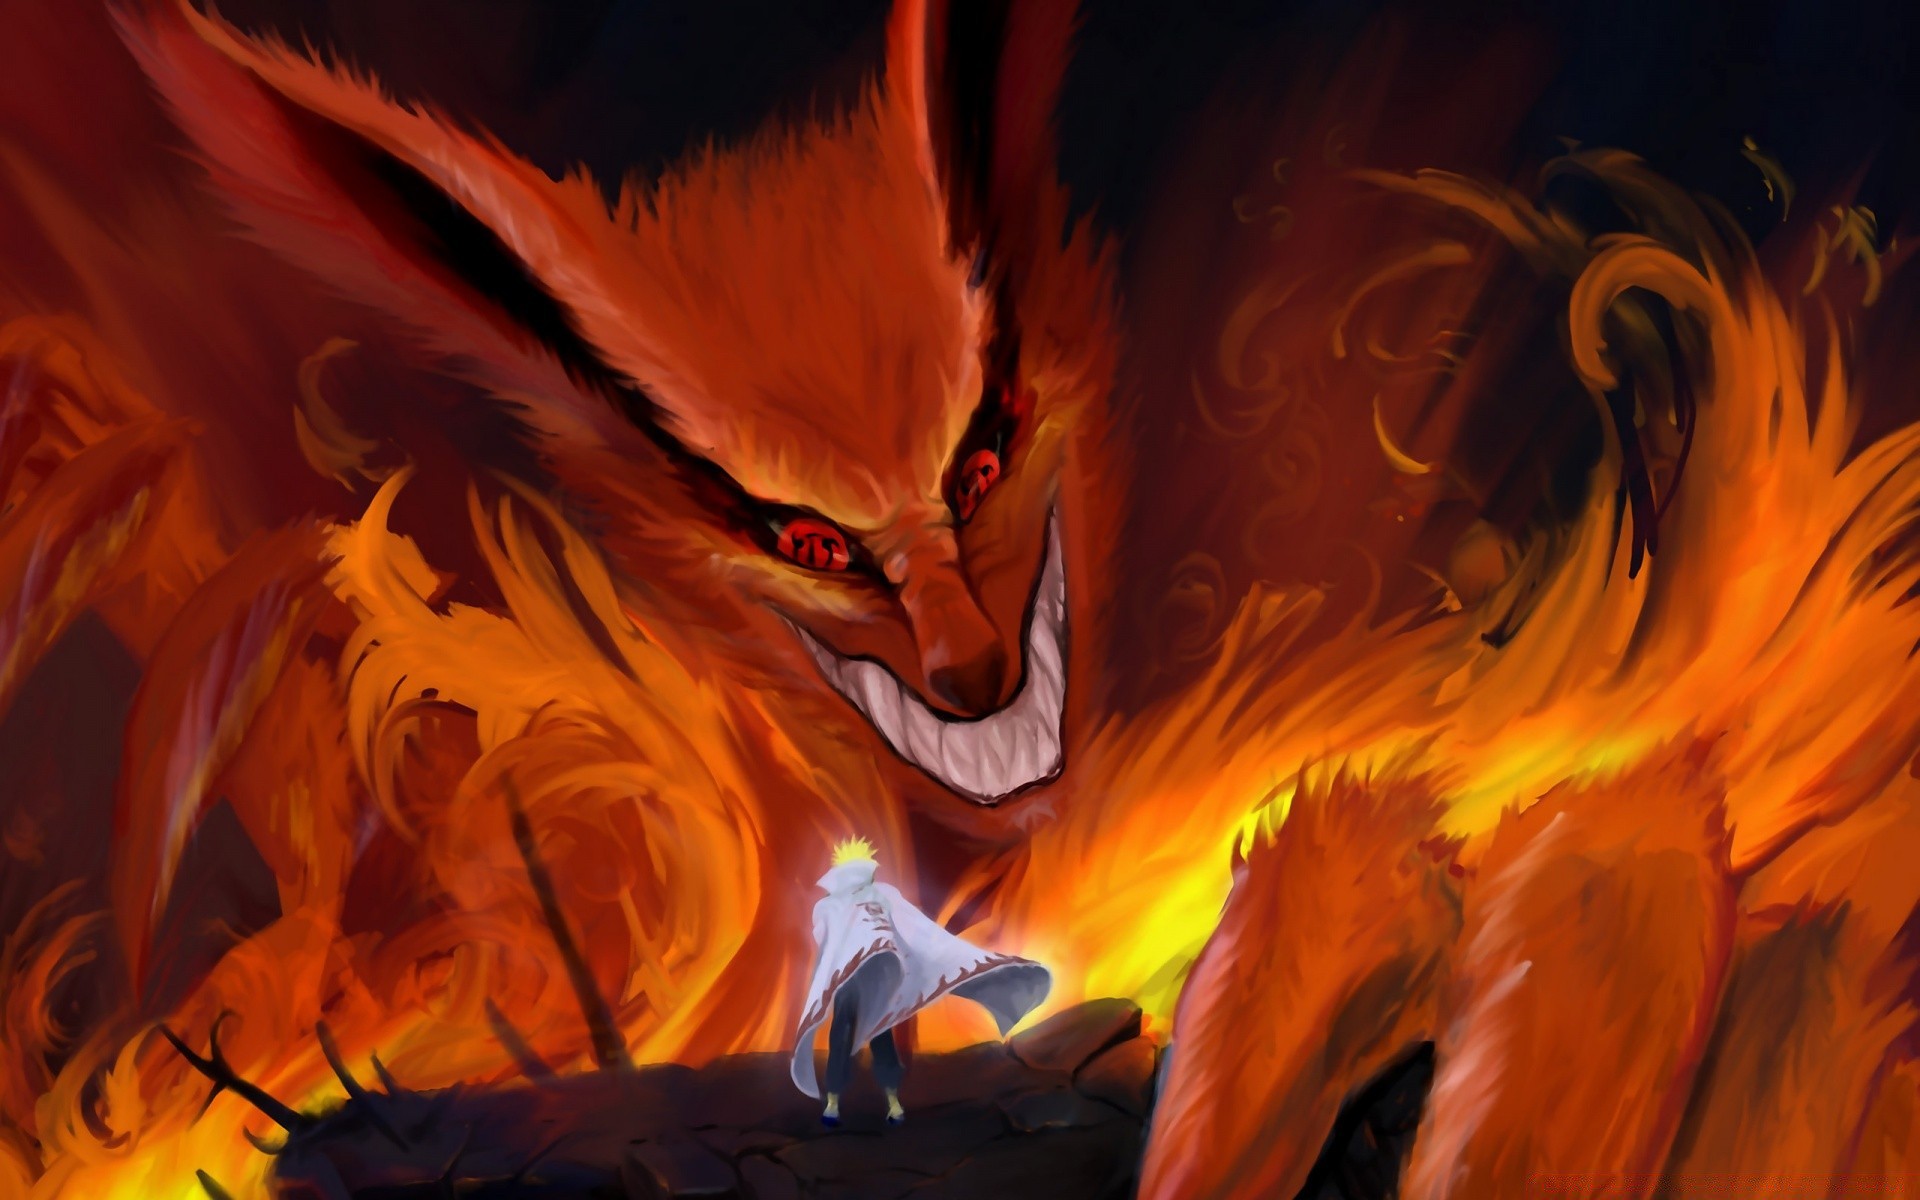 anime flame bonfire campfire hot heat blur danger blaze motion energy warmly fireplace wildfire tongue inferno